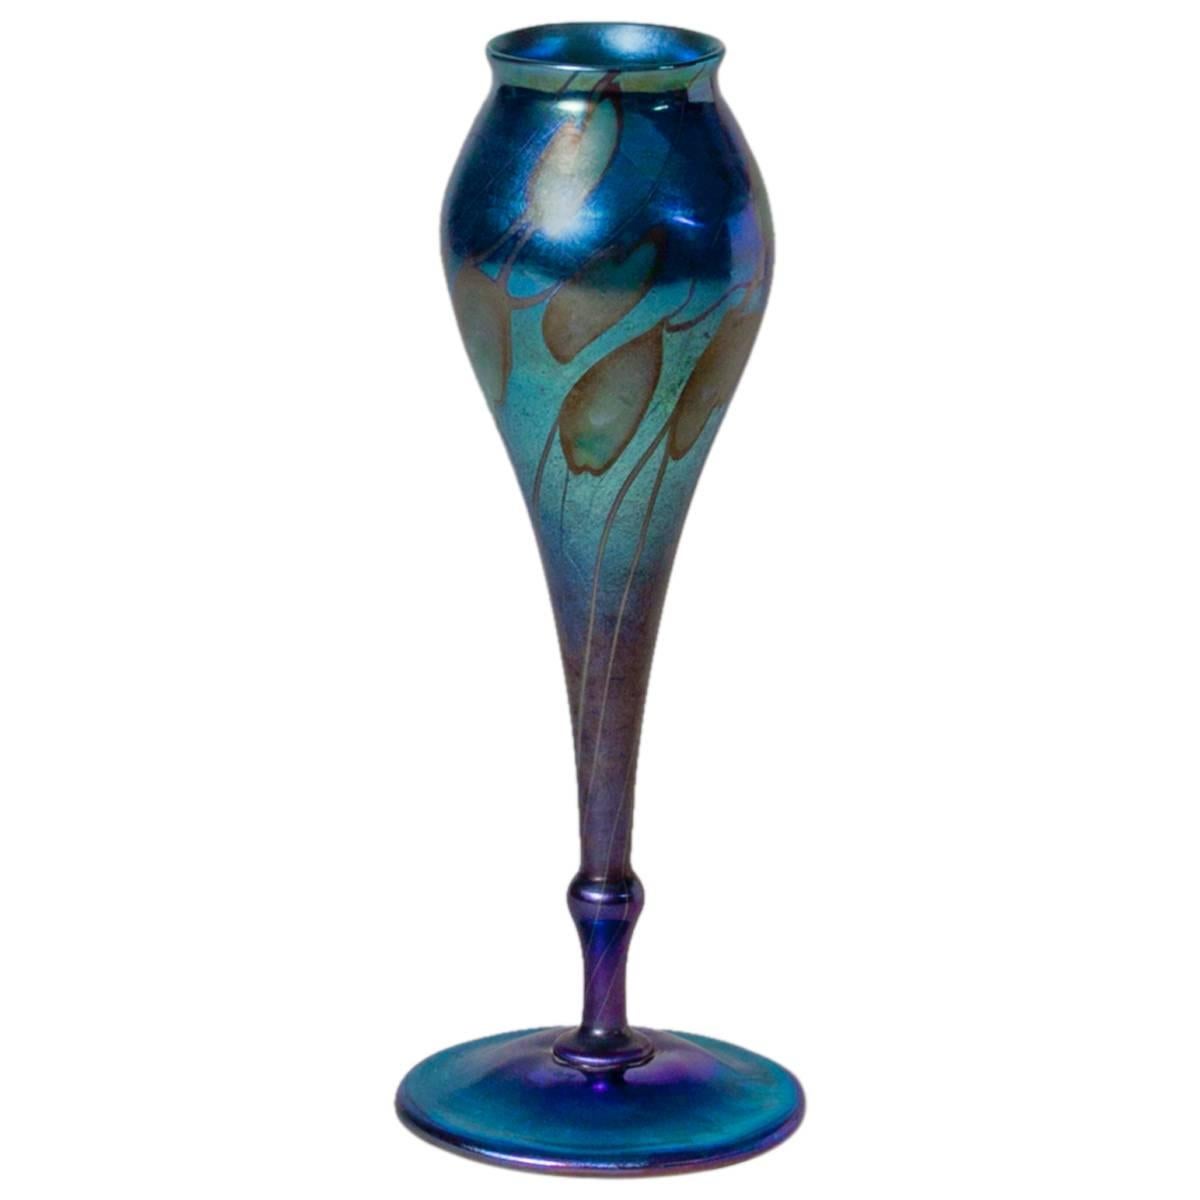 Tiffany Studios Favrile Glass Decorated Flower Form Vase